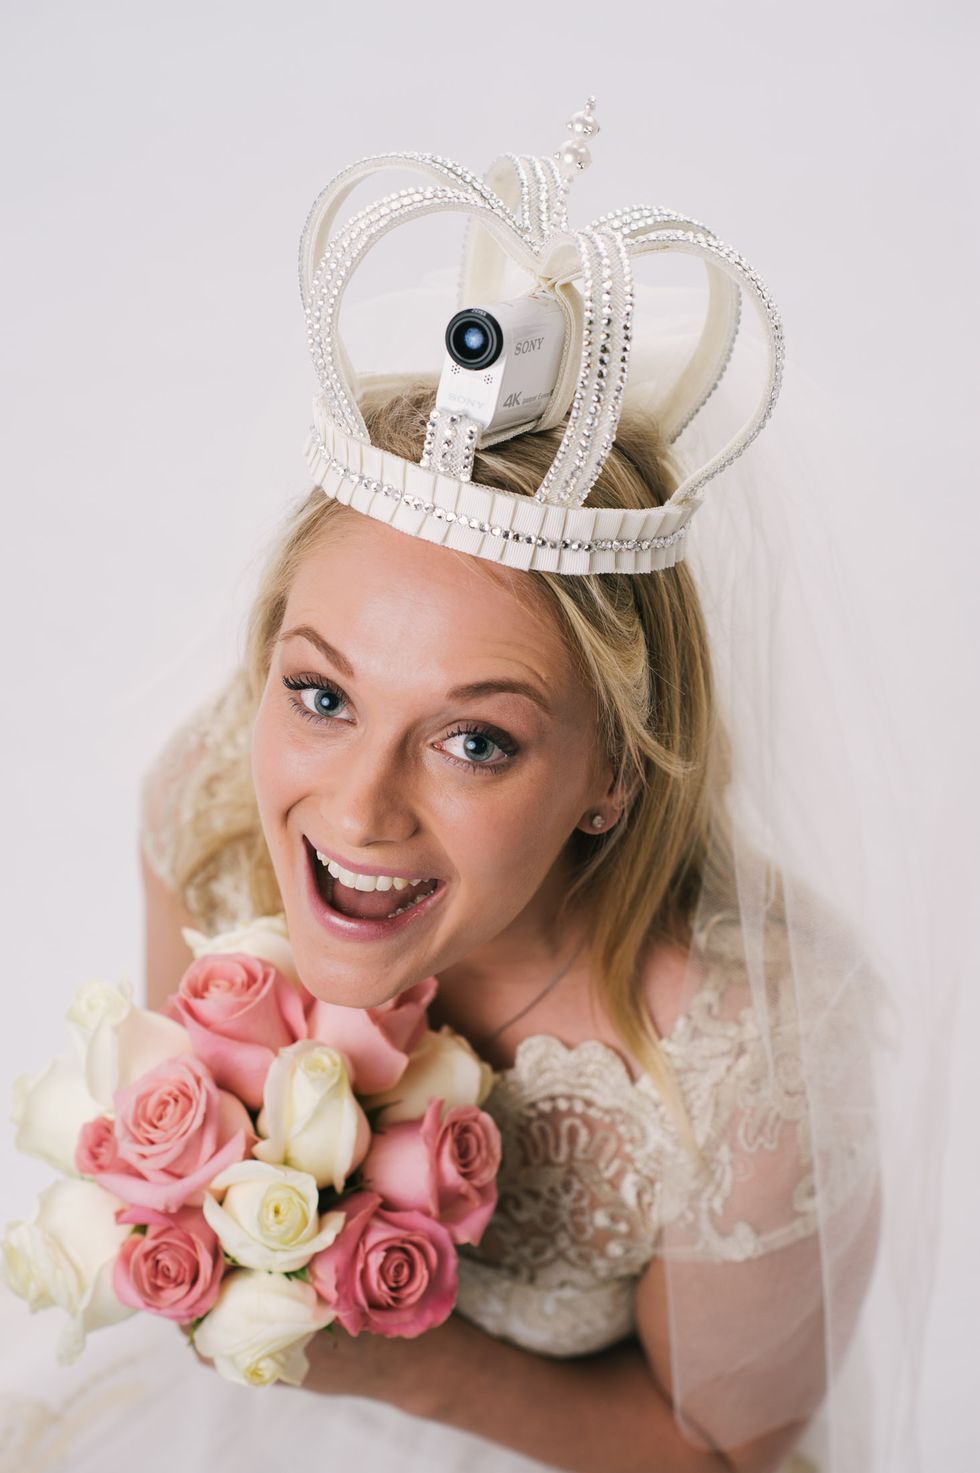 Wearable technology wedding crown